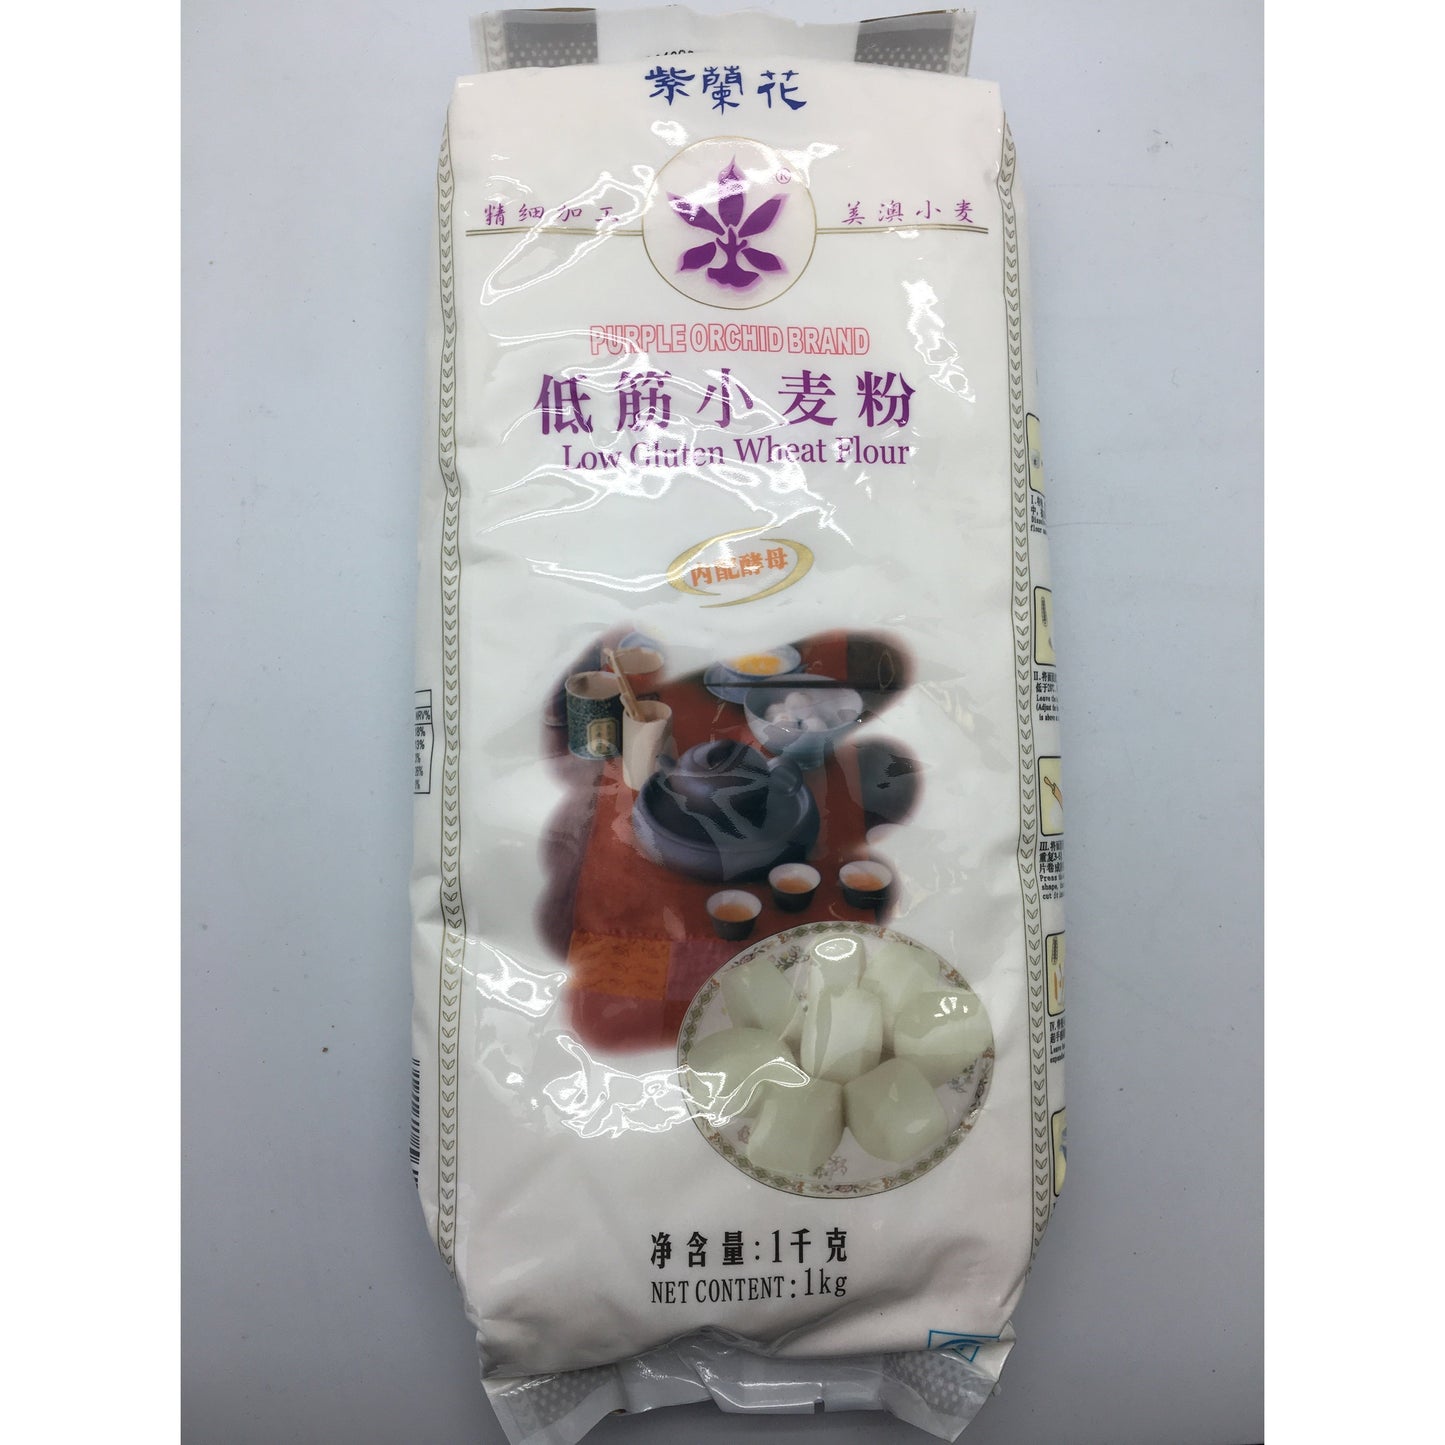 PD009M Purple Orchid Brand -Low Gluten Wheat Flour 1kg - 10 bags / 1CTN - New Eastland Pty Ltd - Asian food wholesalers